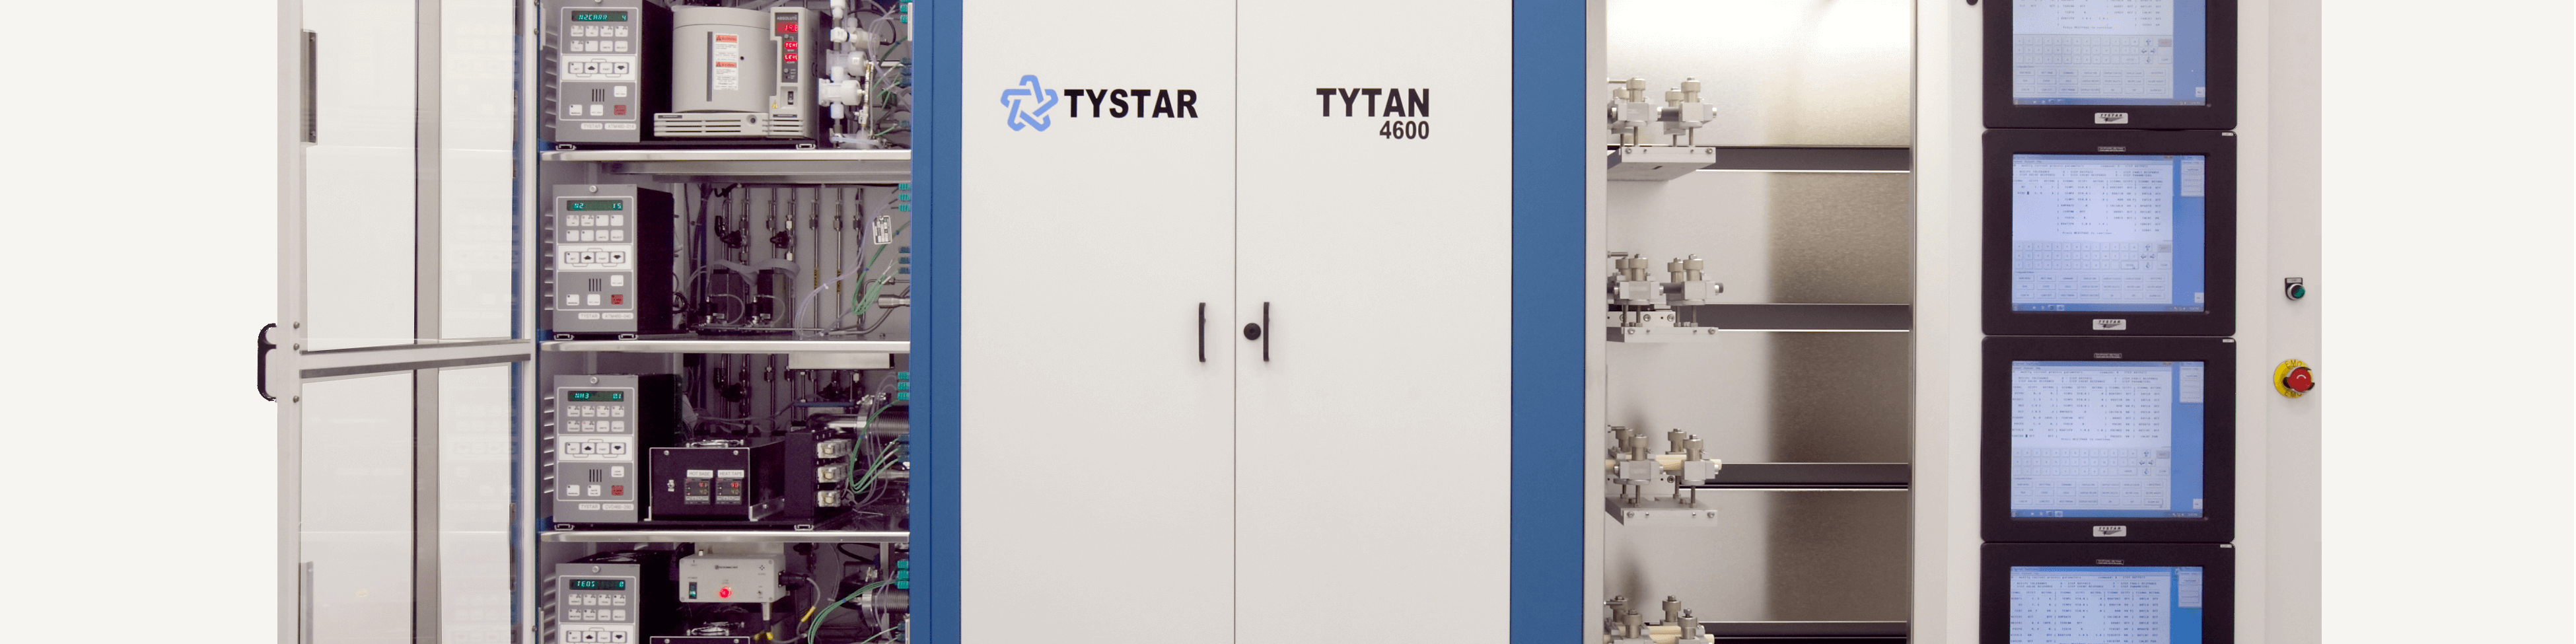 Tystar Banner Image